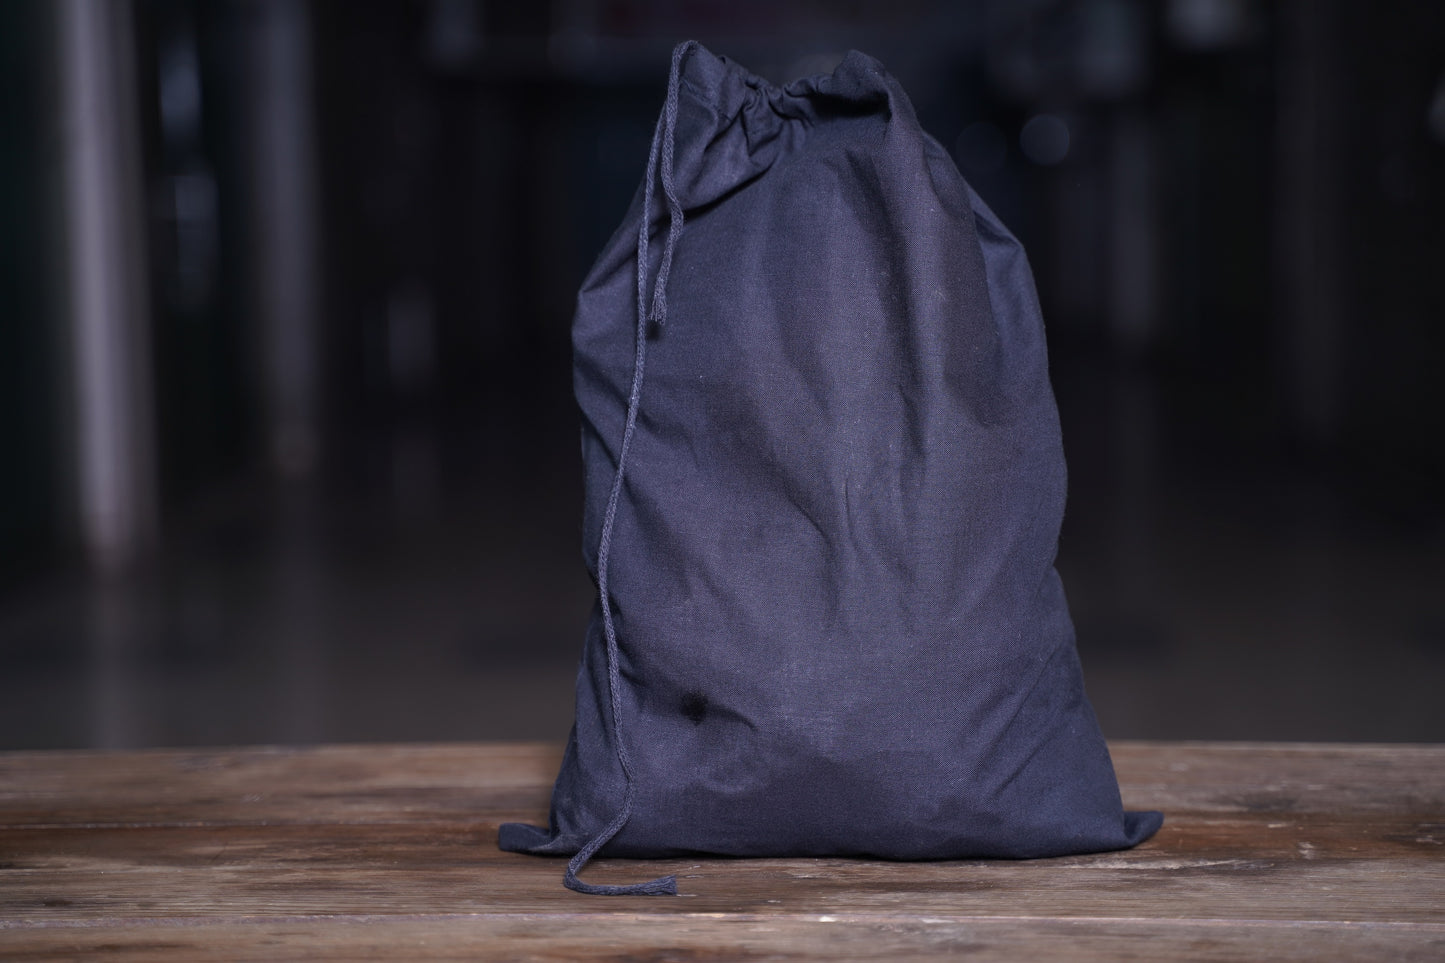 6x8 Inches Reusable Eco-Friendly Cotton Single Drawstring Bags Black Color